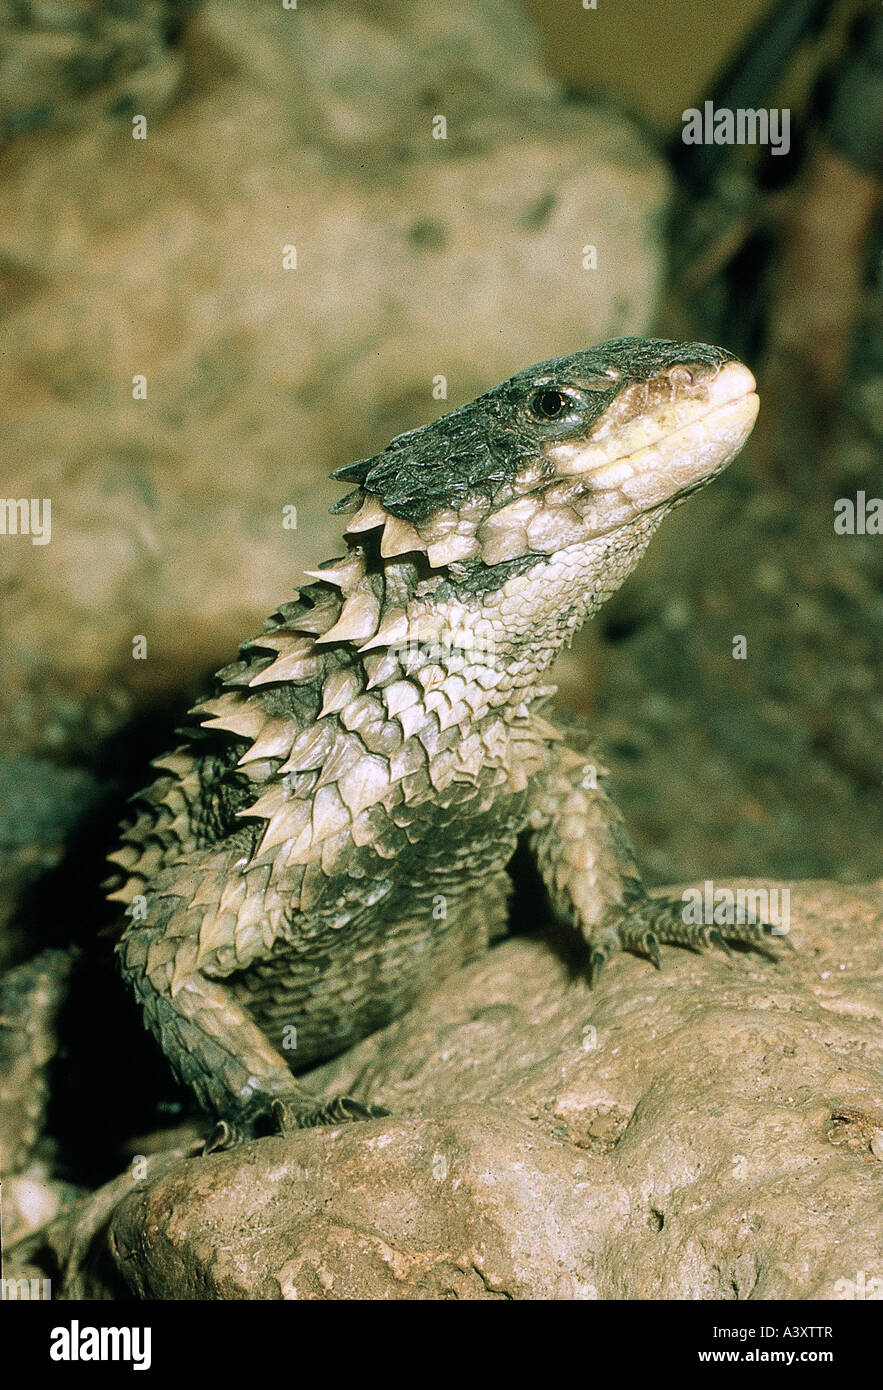 zoology / animals, reptiles, lizards, Giant Girdled Lizard, (Cordylus giganteus), standing at rocks, distribution: Southern Afri Stock Photo